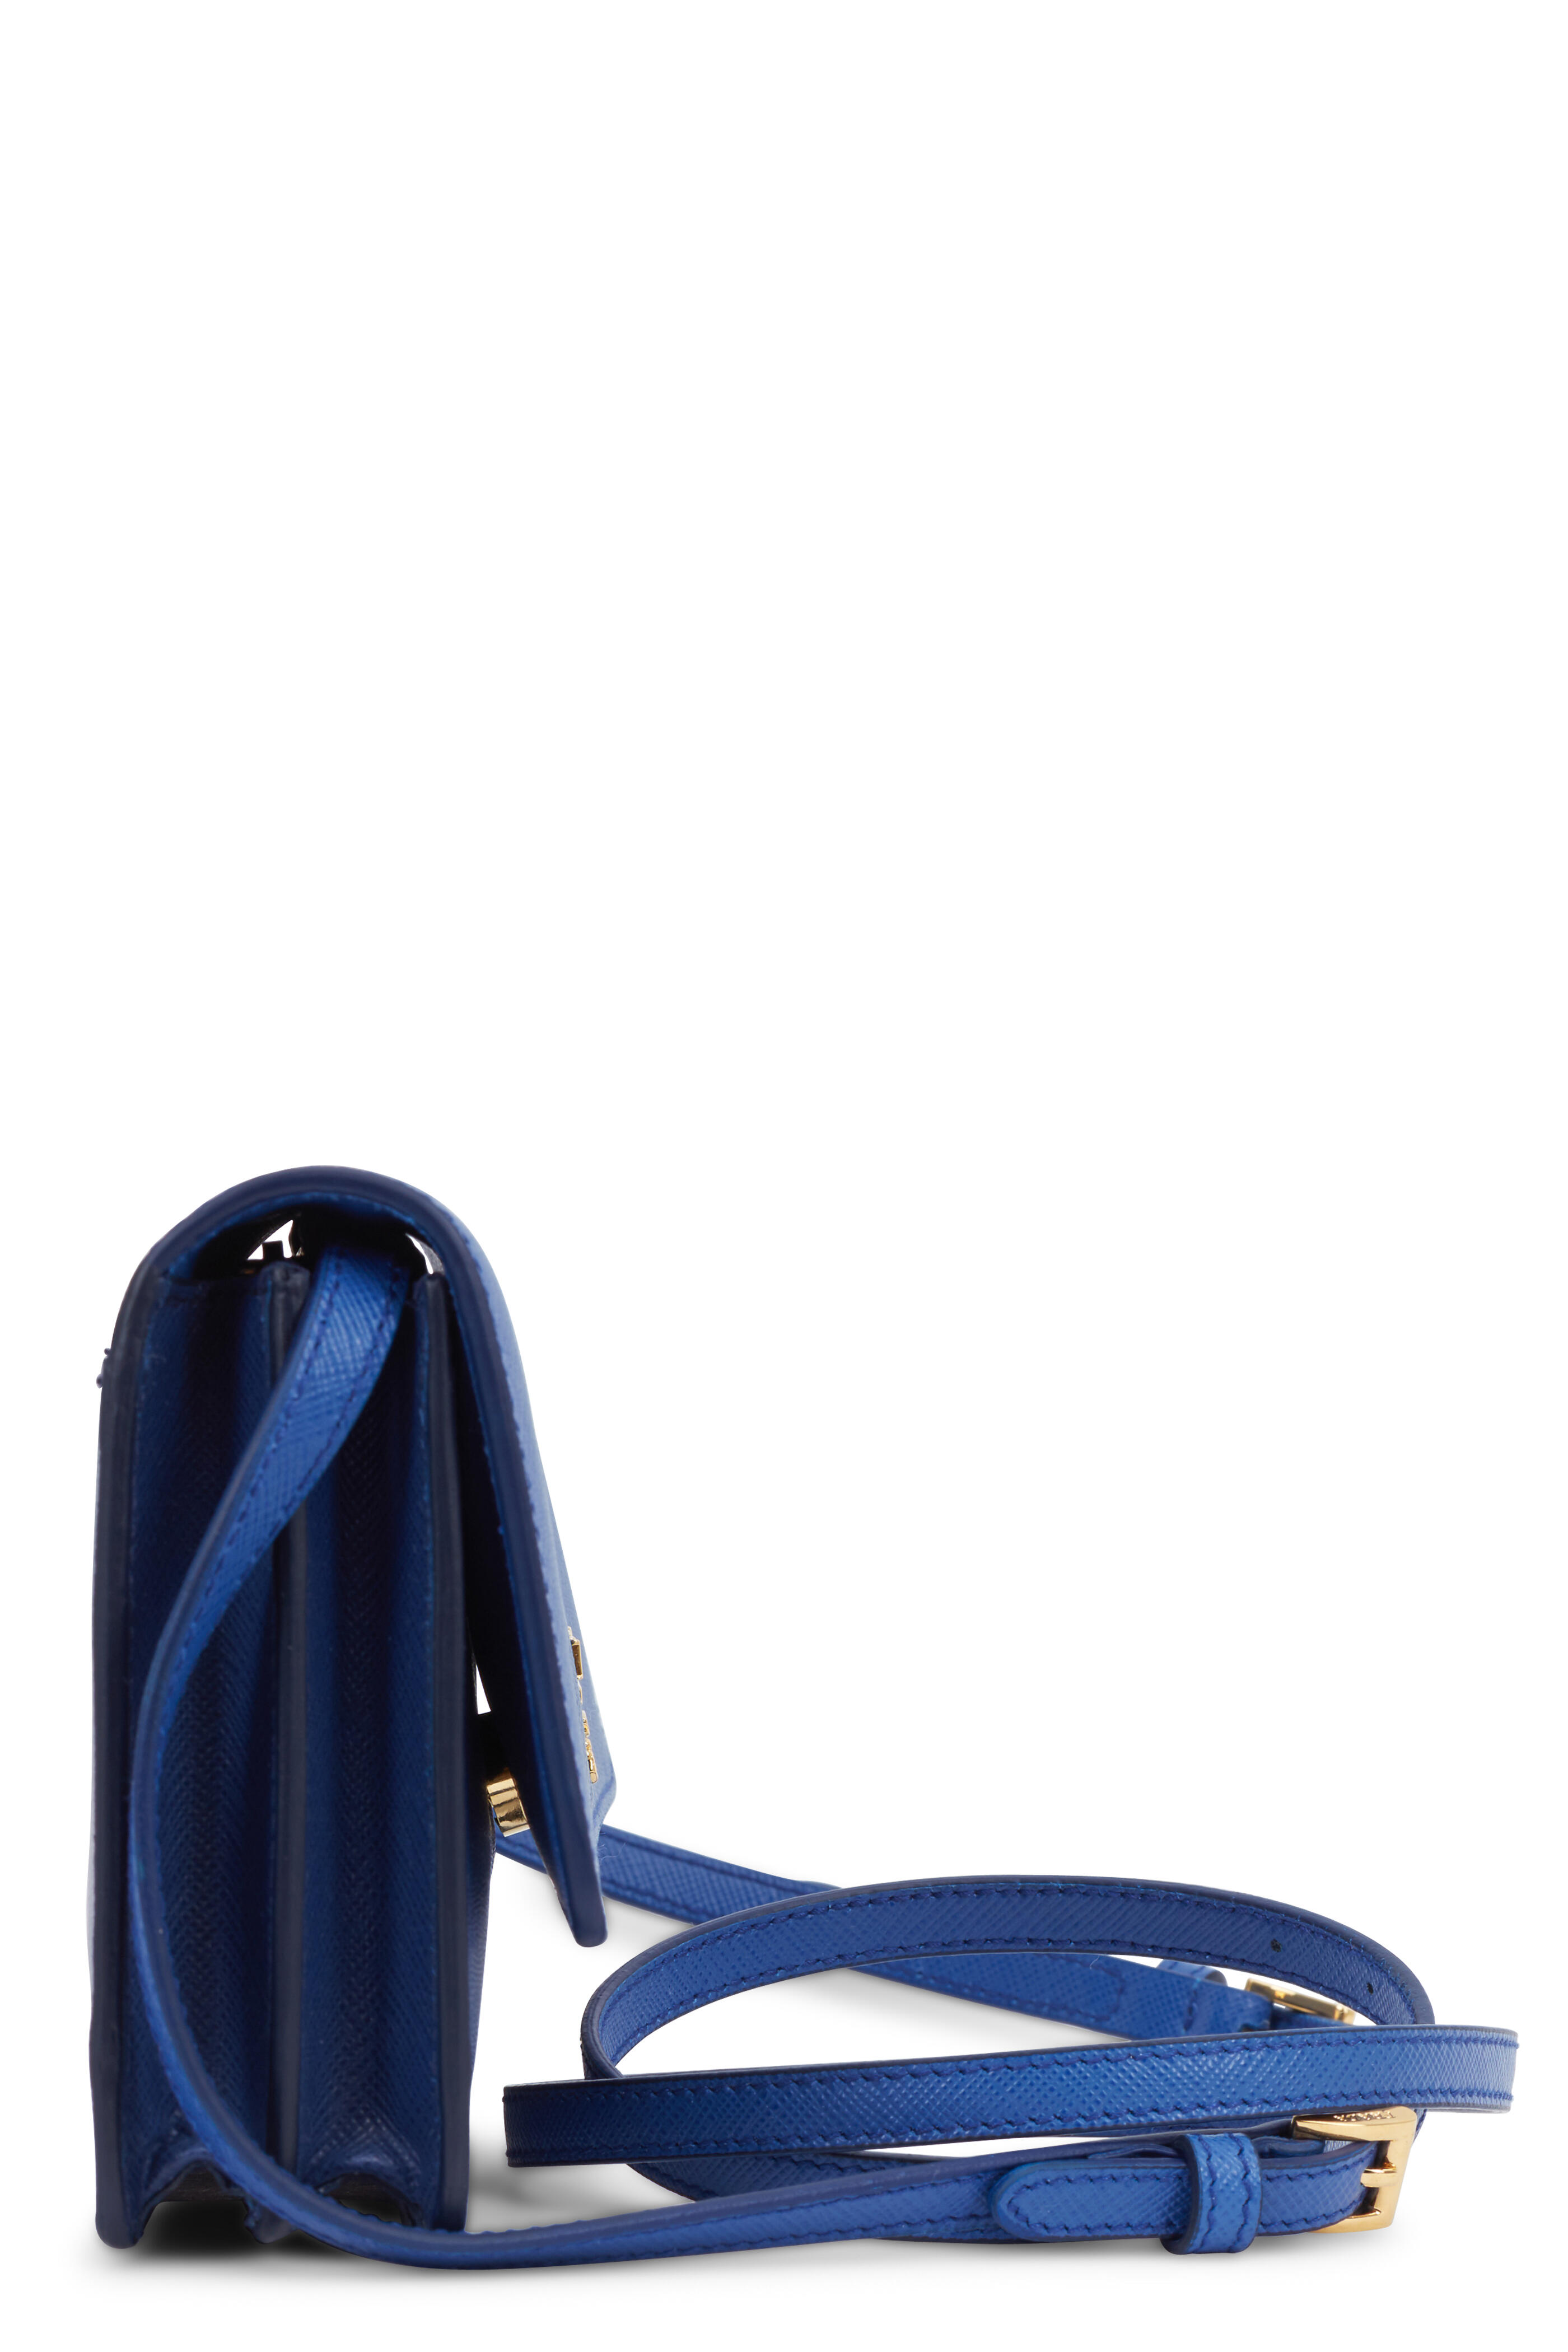 Prada Blue Saffiano Wallet with Chain Crossbody Strap - Handbags & Purses -  Costume & Dressing Accessories